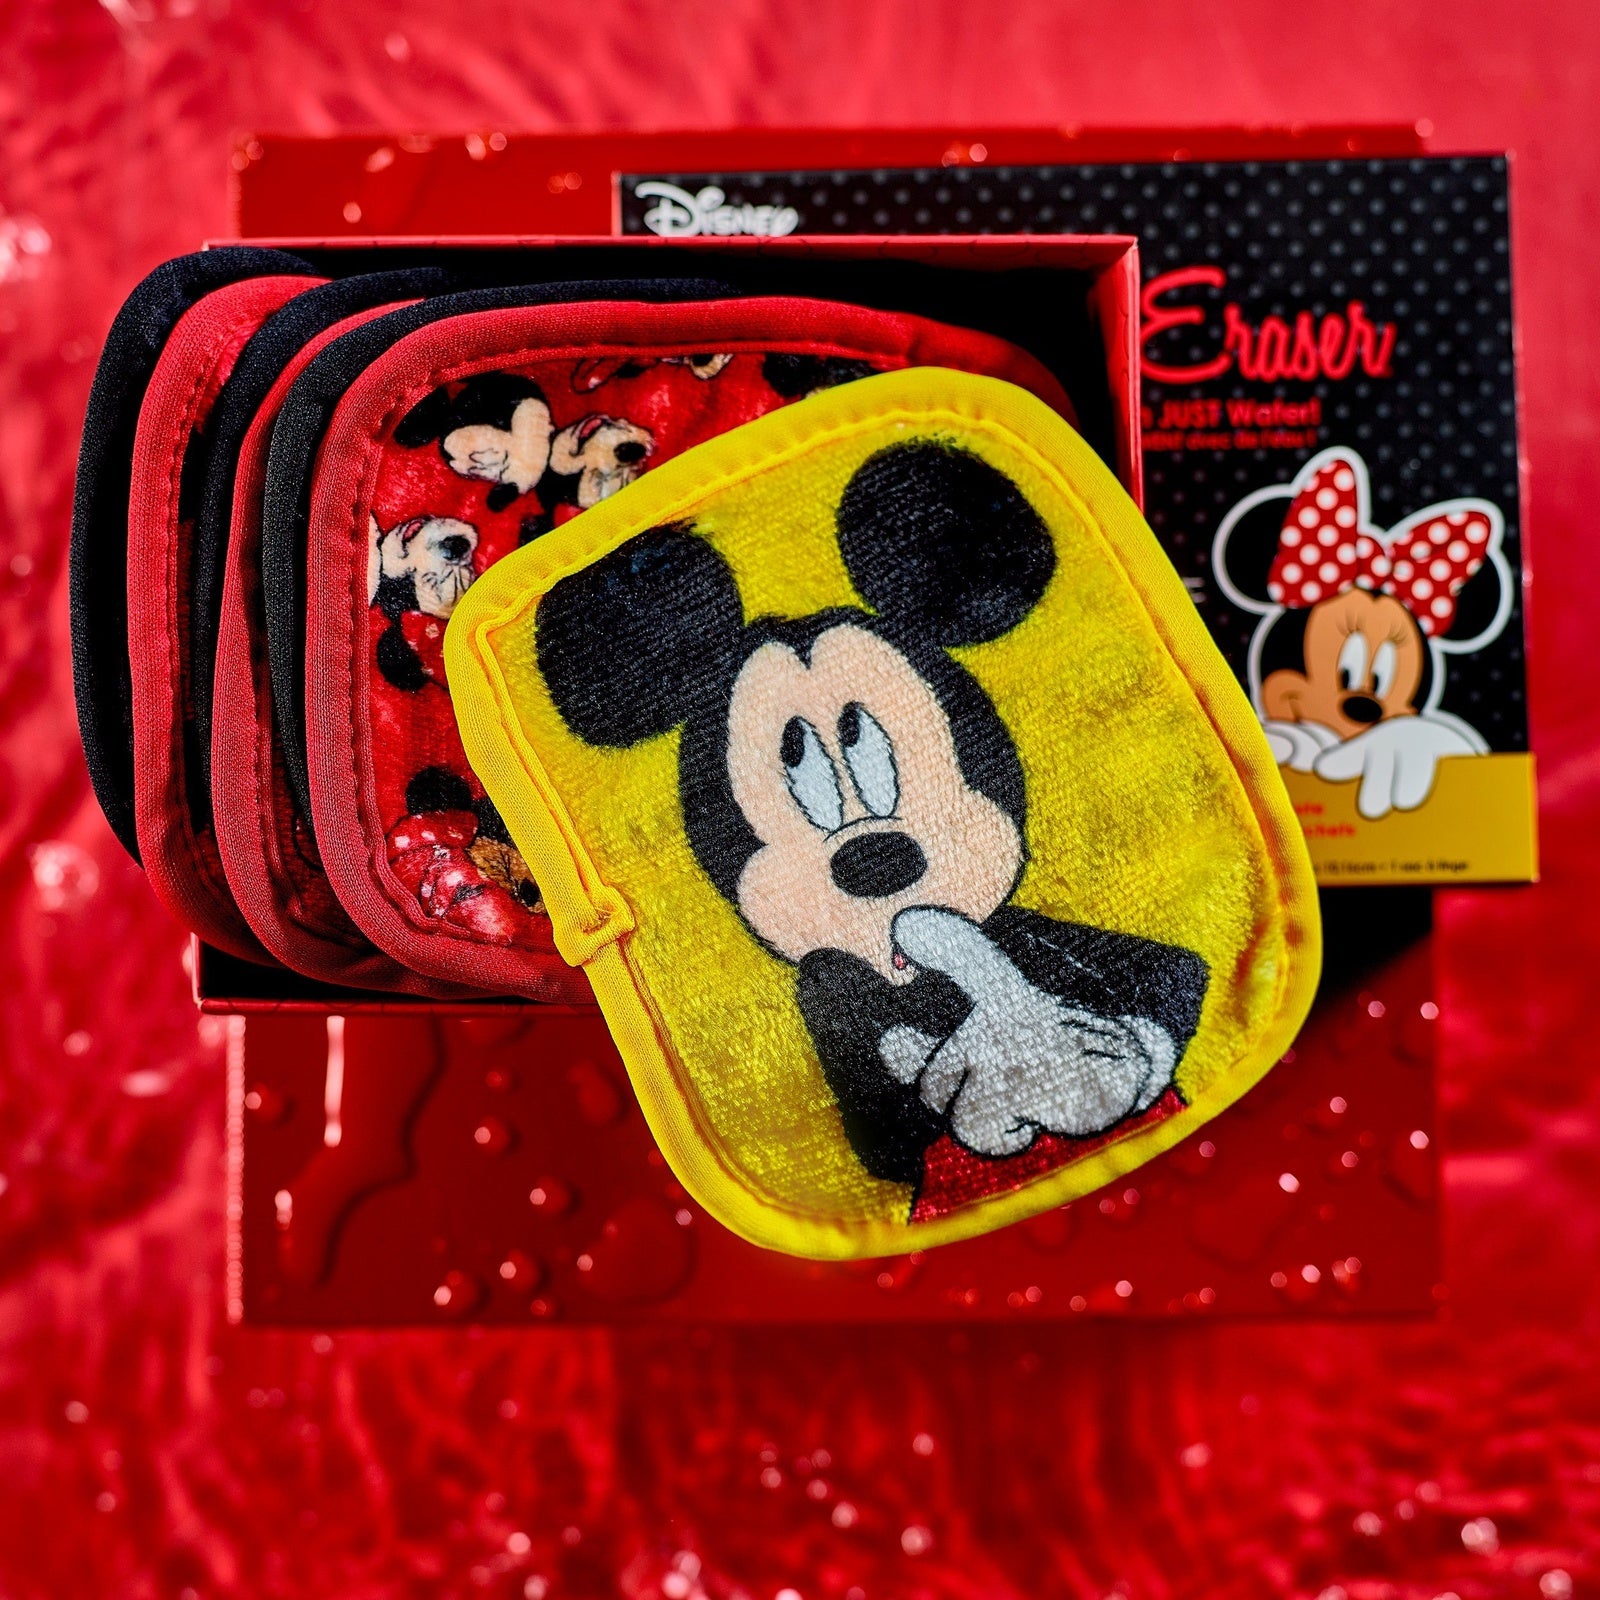 The Original Makeup Eraser Mickey & Minnie 7-Day Set